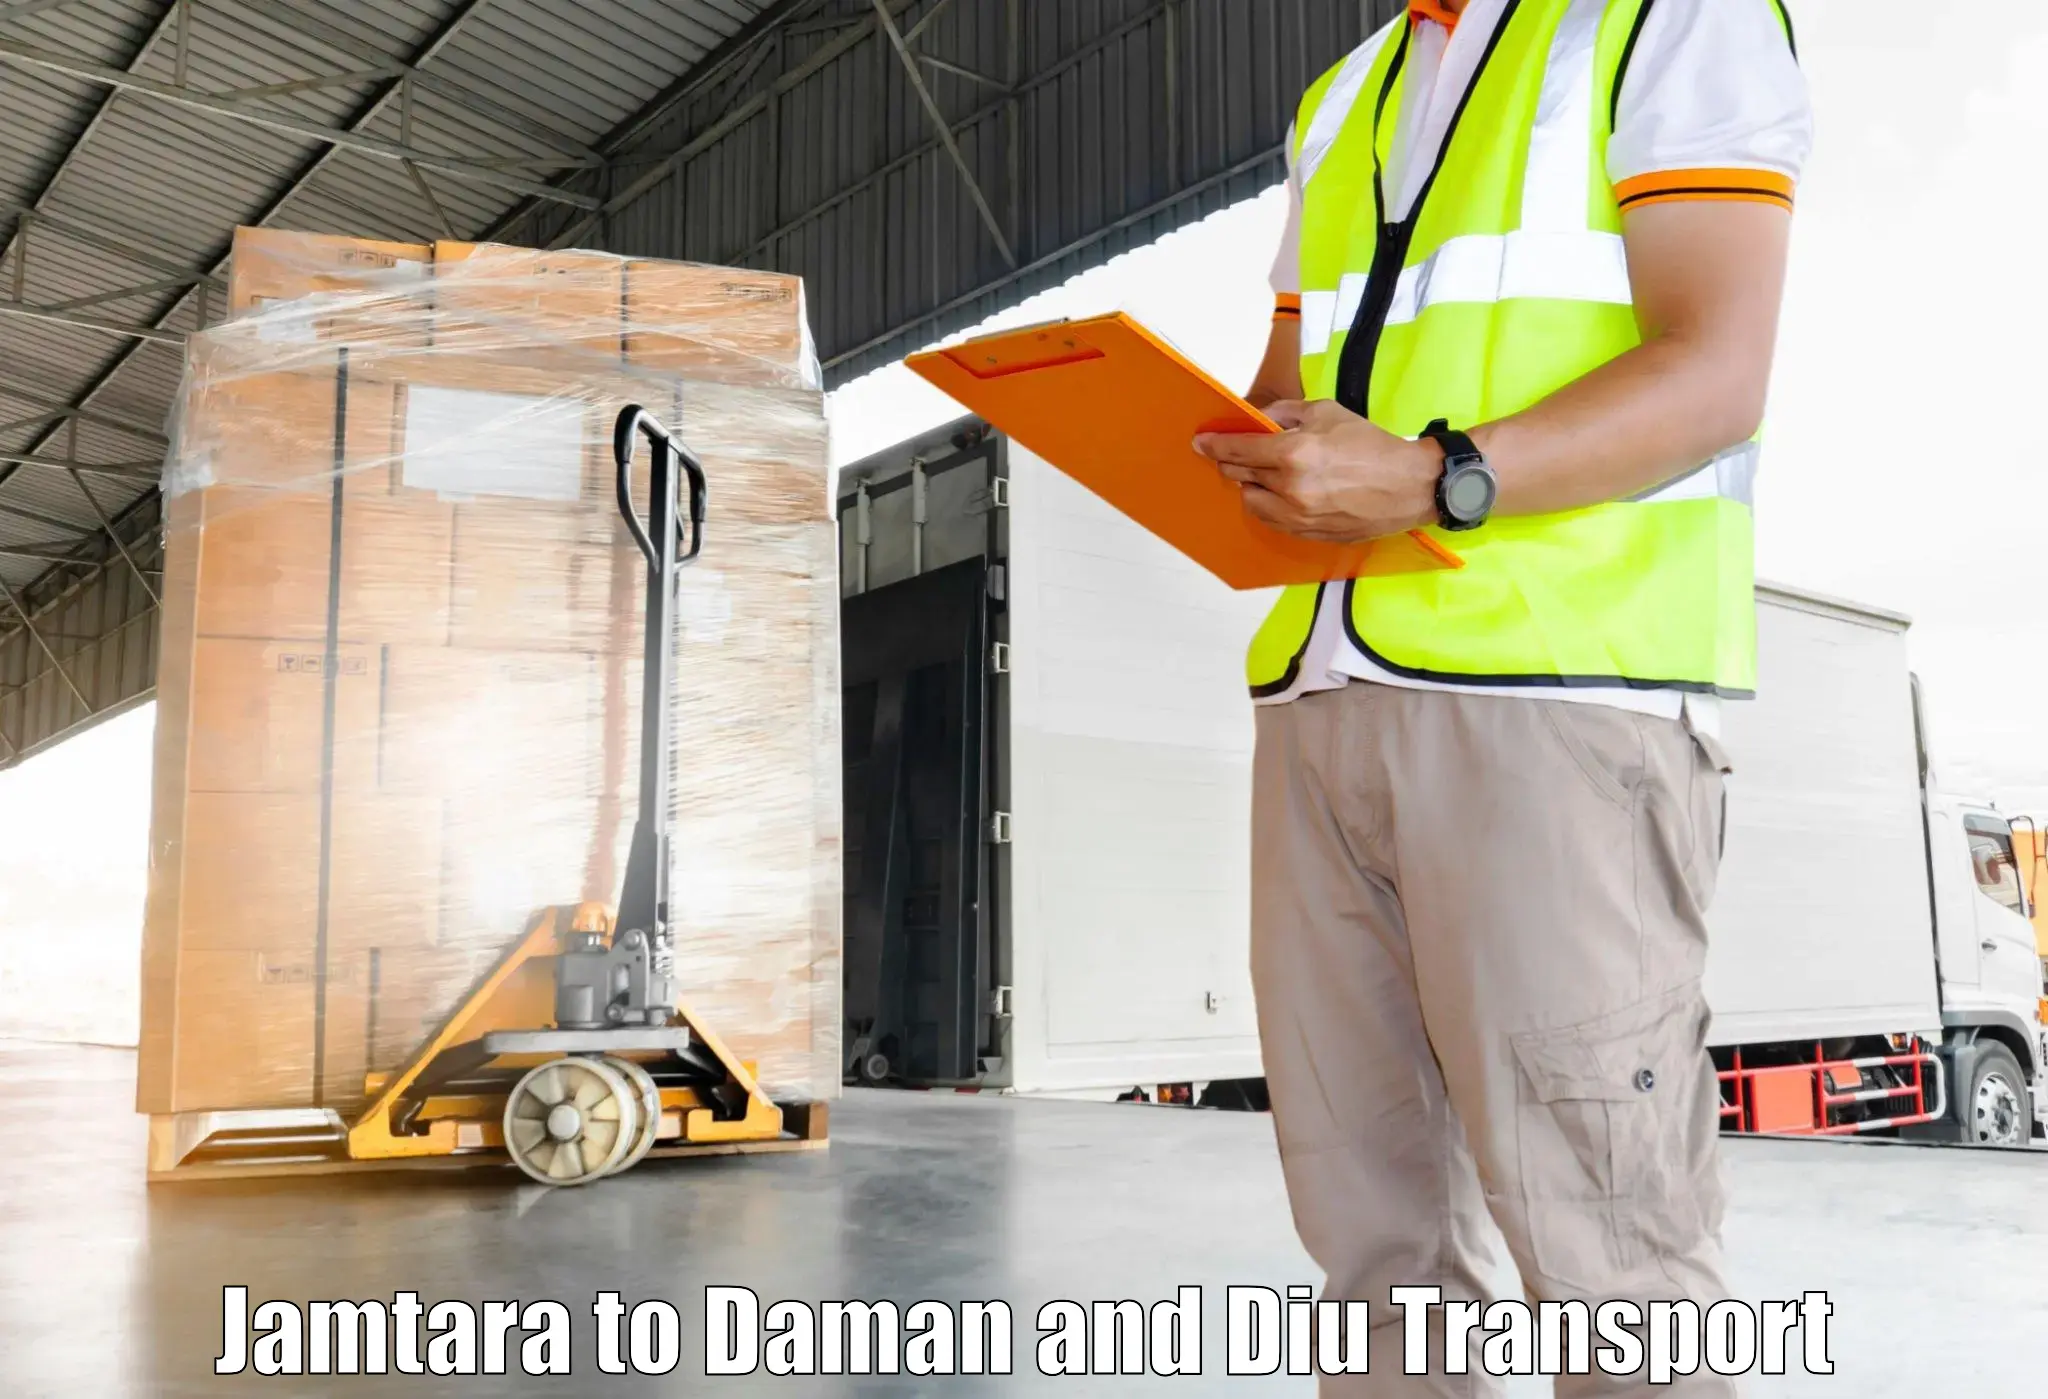 Transport in sharing Jamtara to Daman and Diu